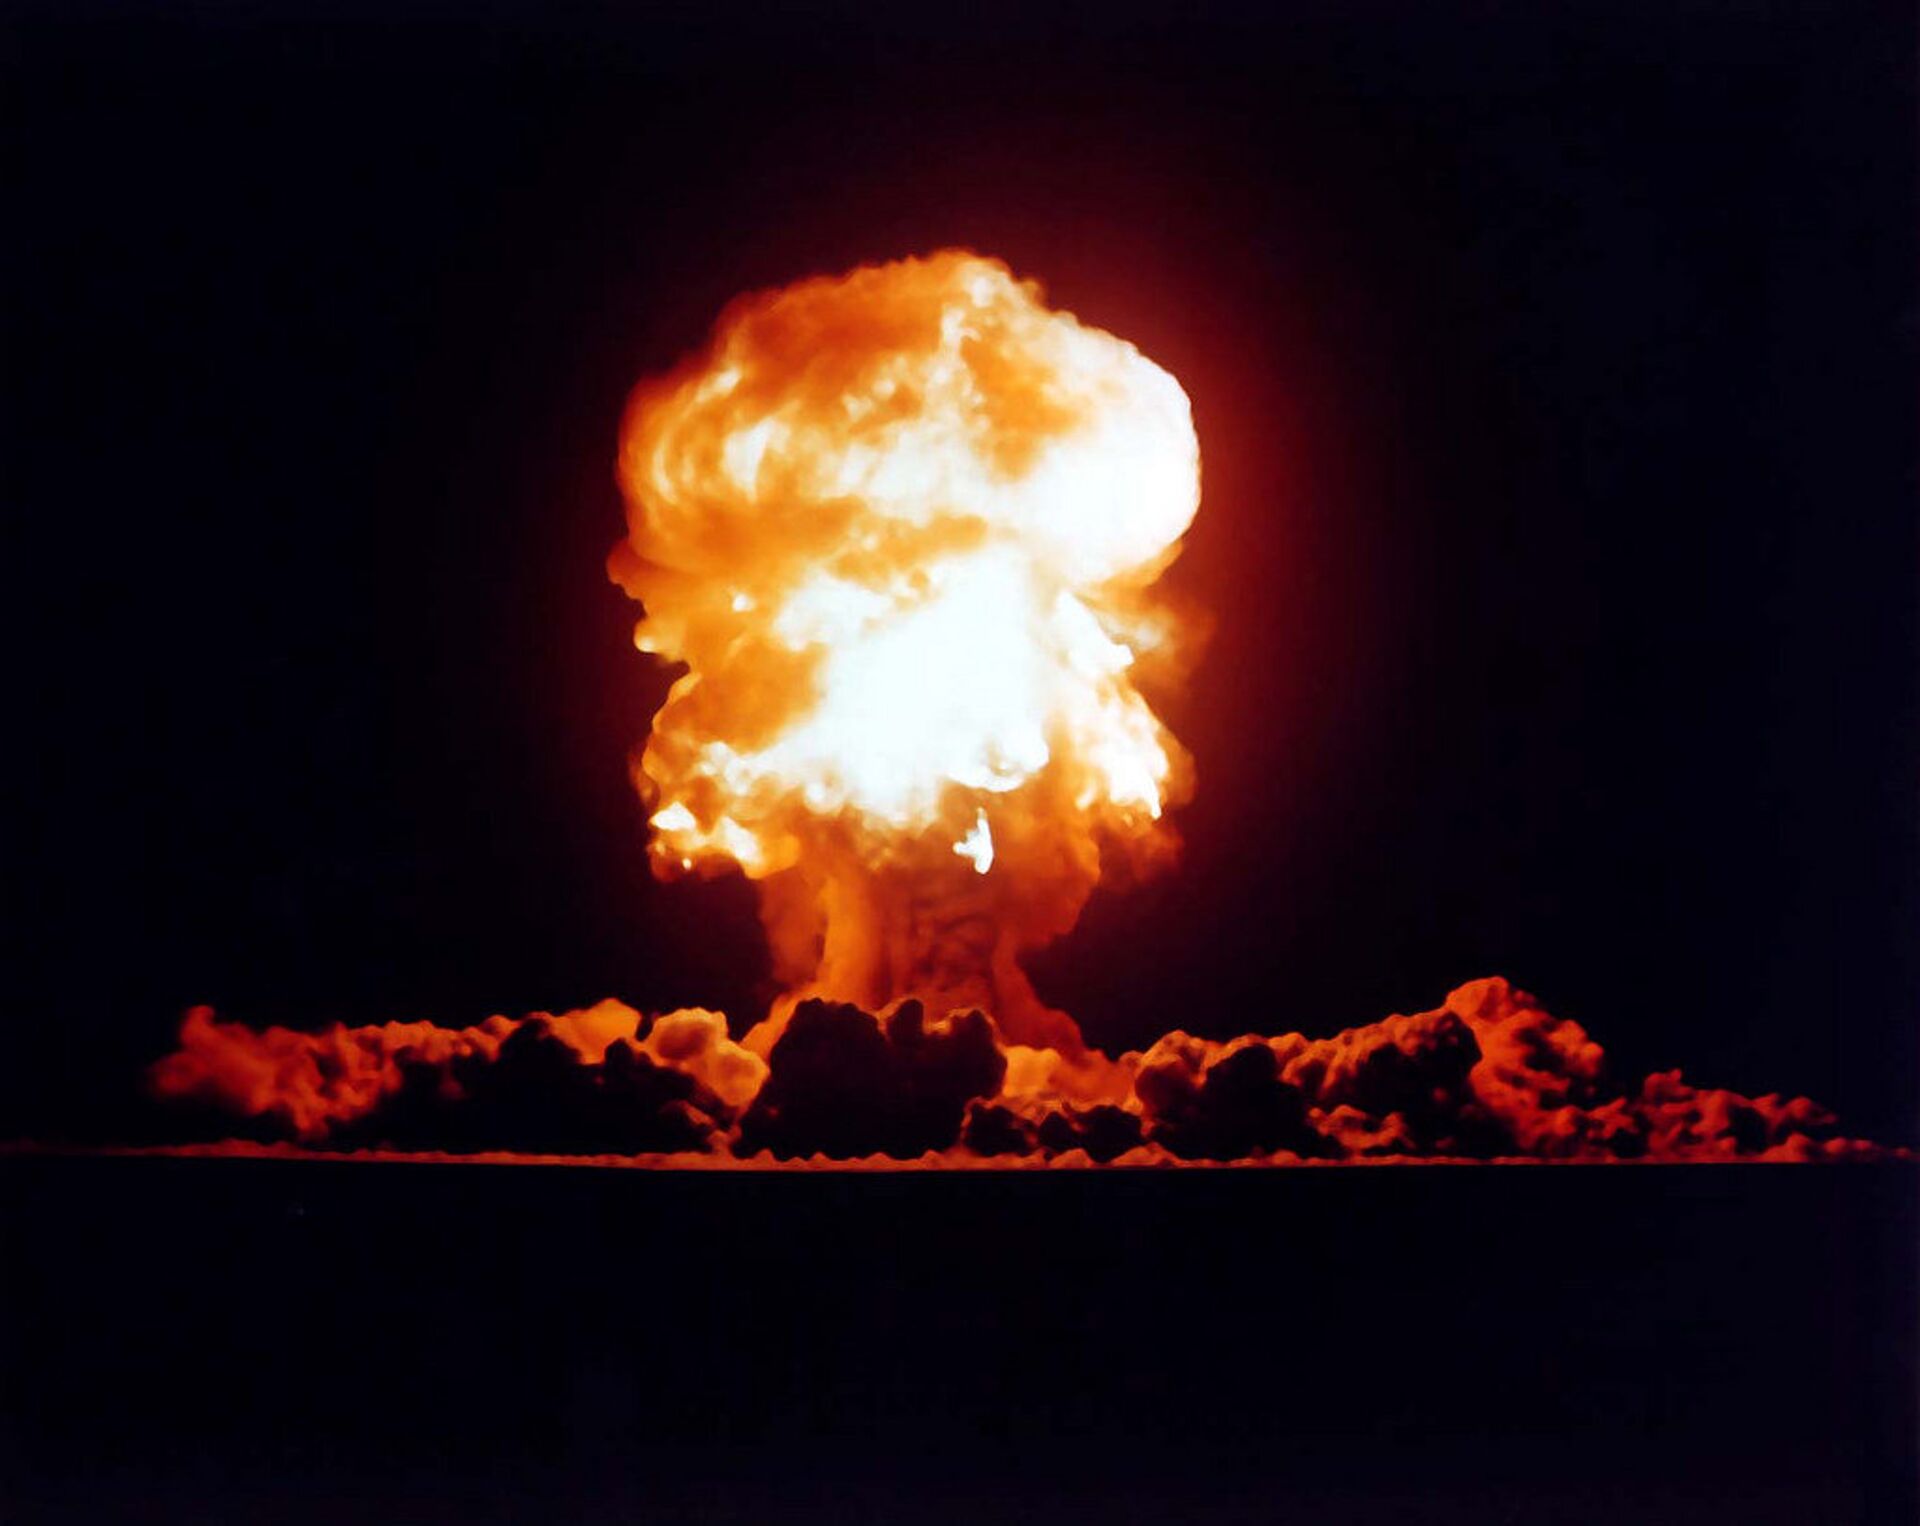 US nuclear weapons test in Nevada in 1957 - Sputnik International, 1920, 08.11.2022